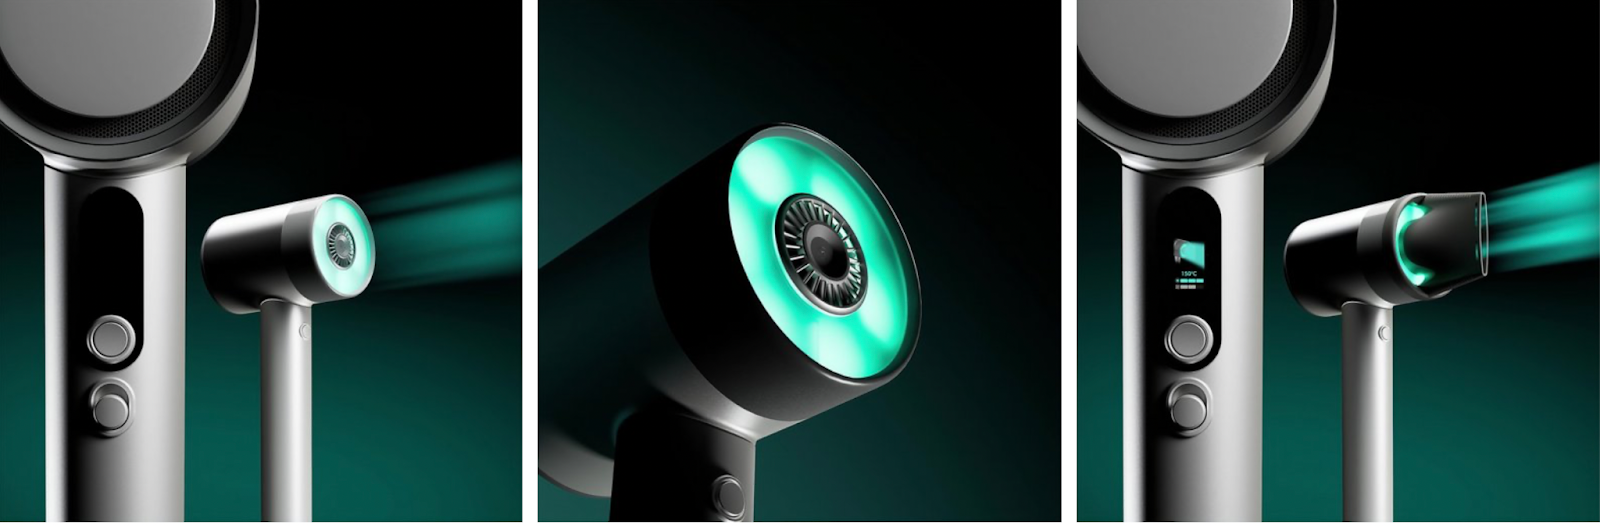 Lighting Innovations: AirLightPro by L’Oreal 